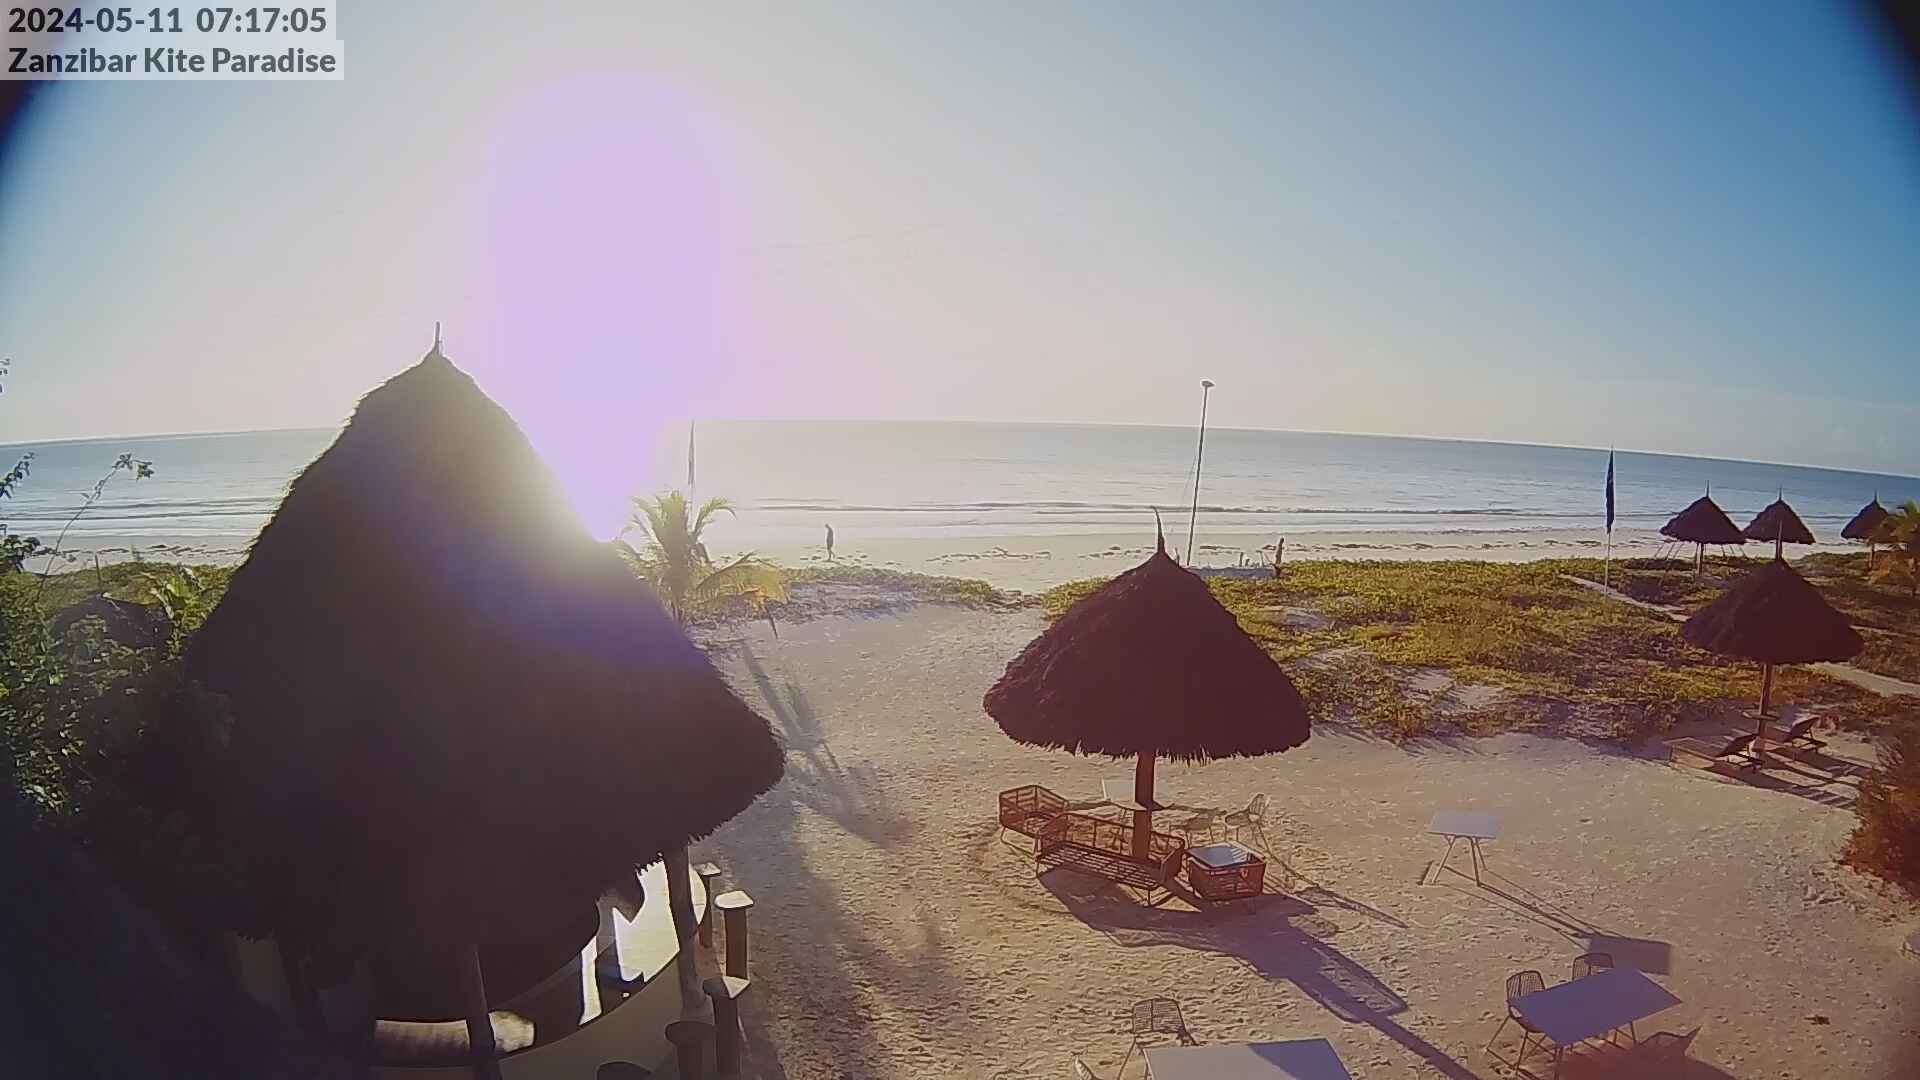 Paje Beach (Sansibar) Tir. 07:17